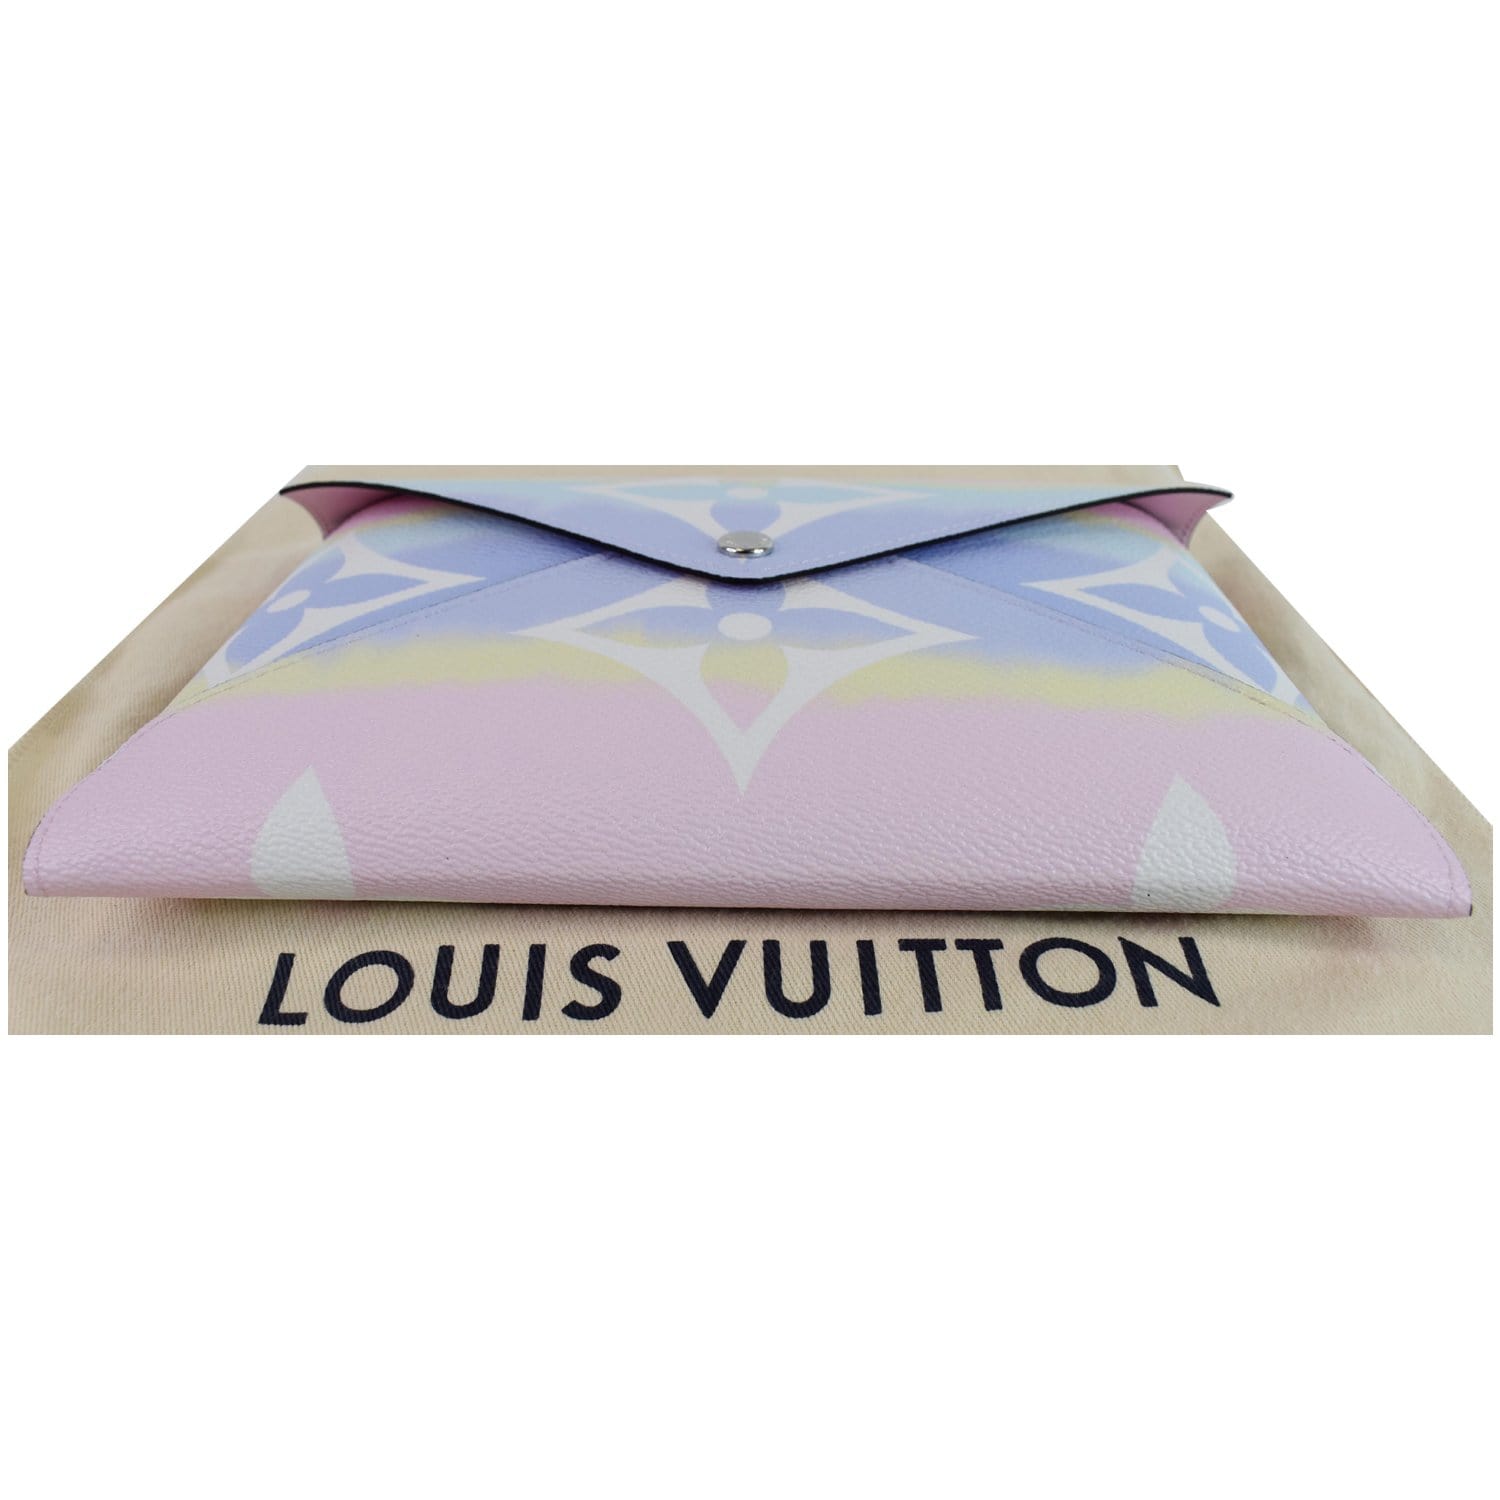 Louis Vuitton Large Kirigami Pochette in Escale Pastel